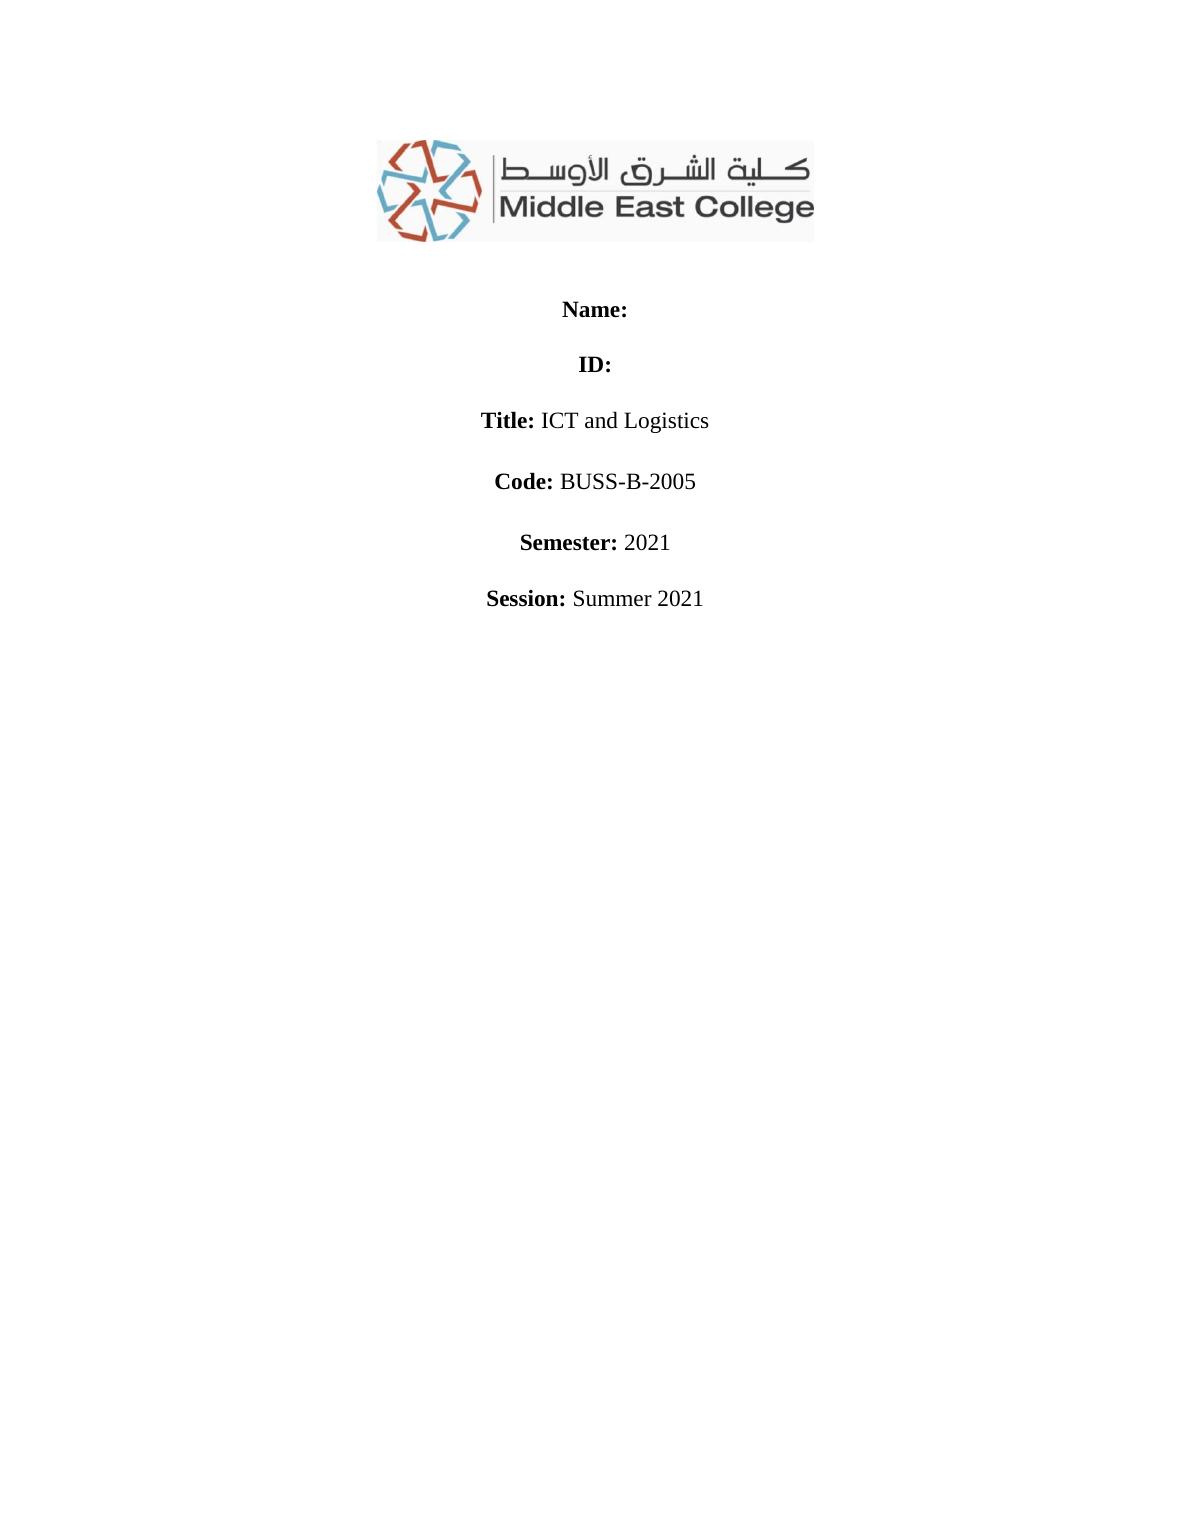 ICT and Logistics Assignment pdf_1